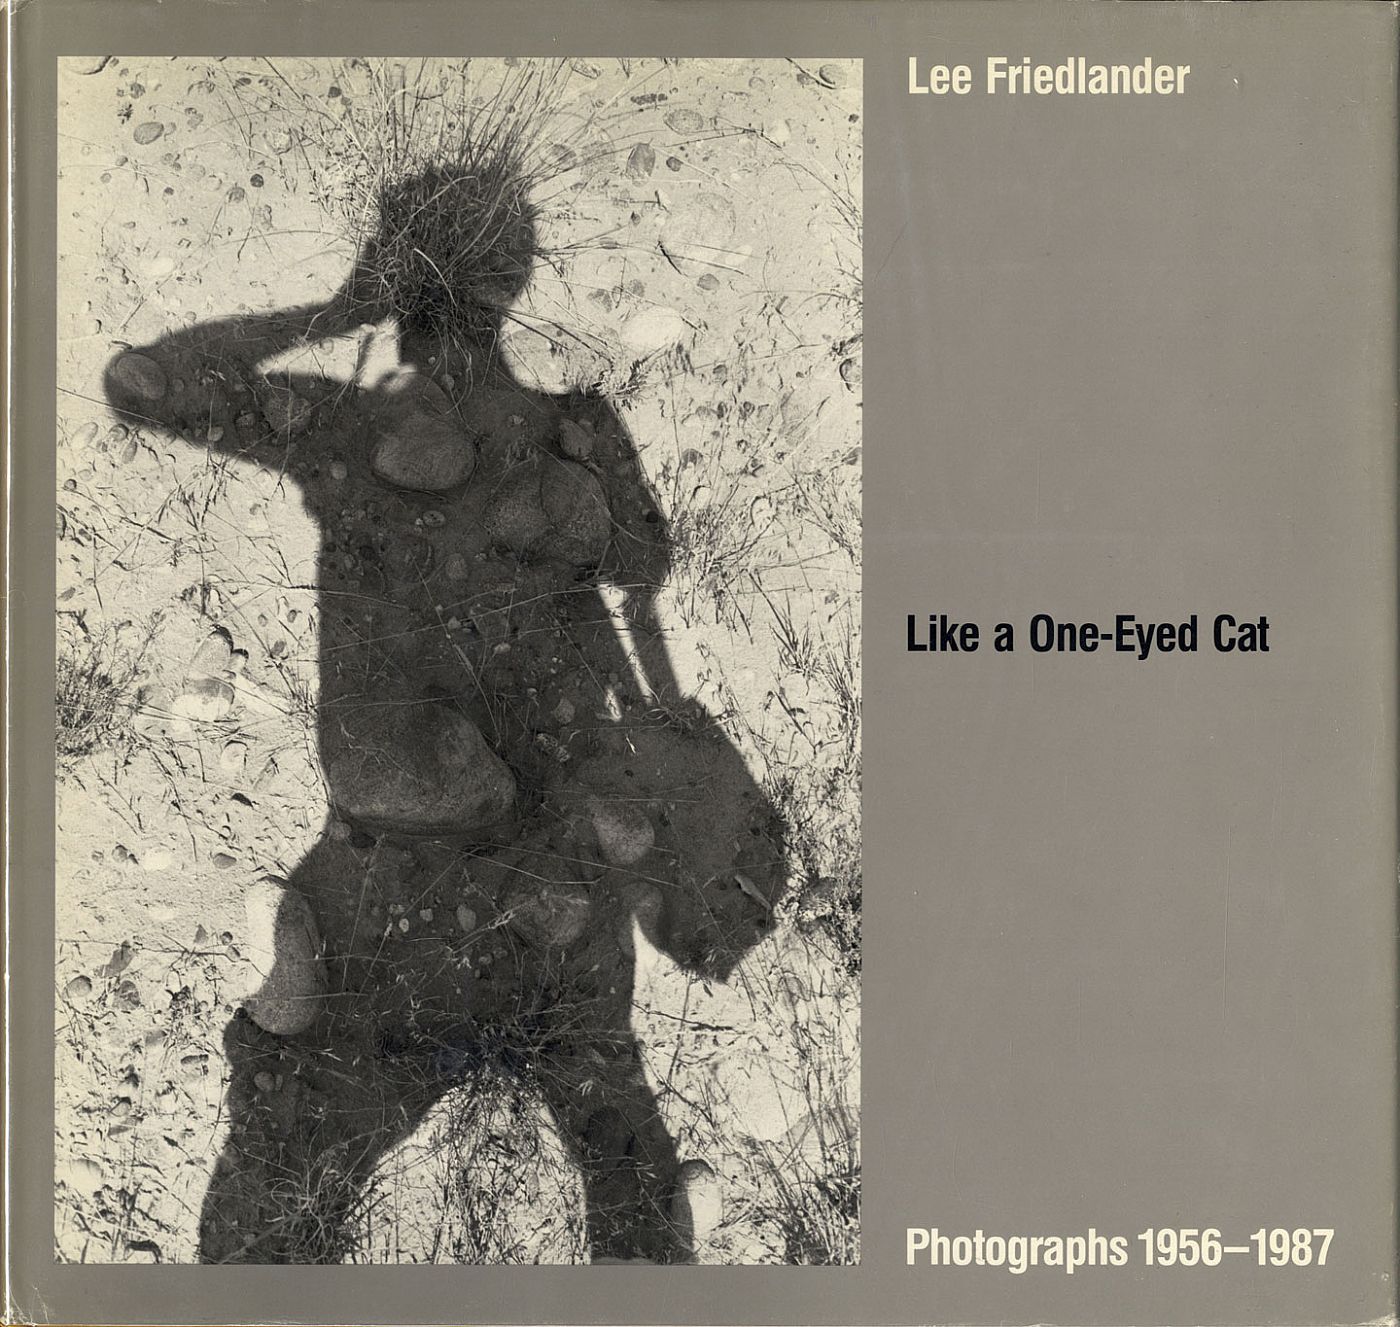 Like a One-Eyed Cat: Photographs by Lee Friedlander 1956-1987